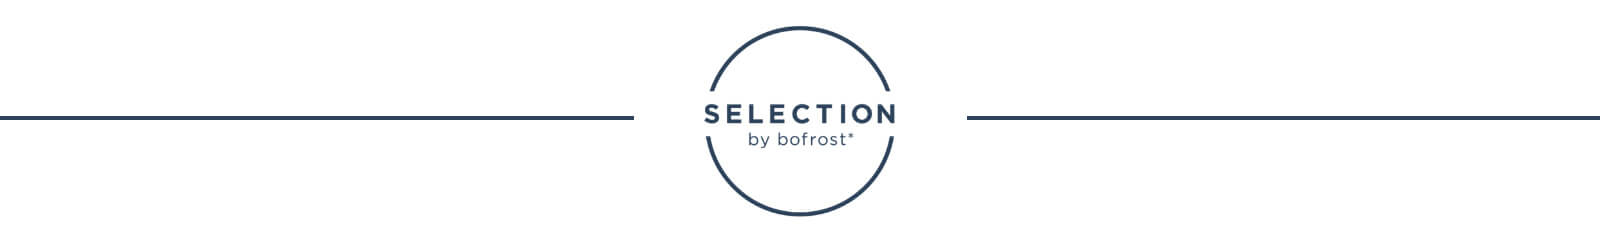 Selection by bofrost* Logo